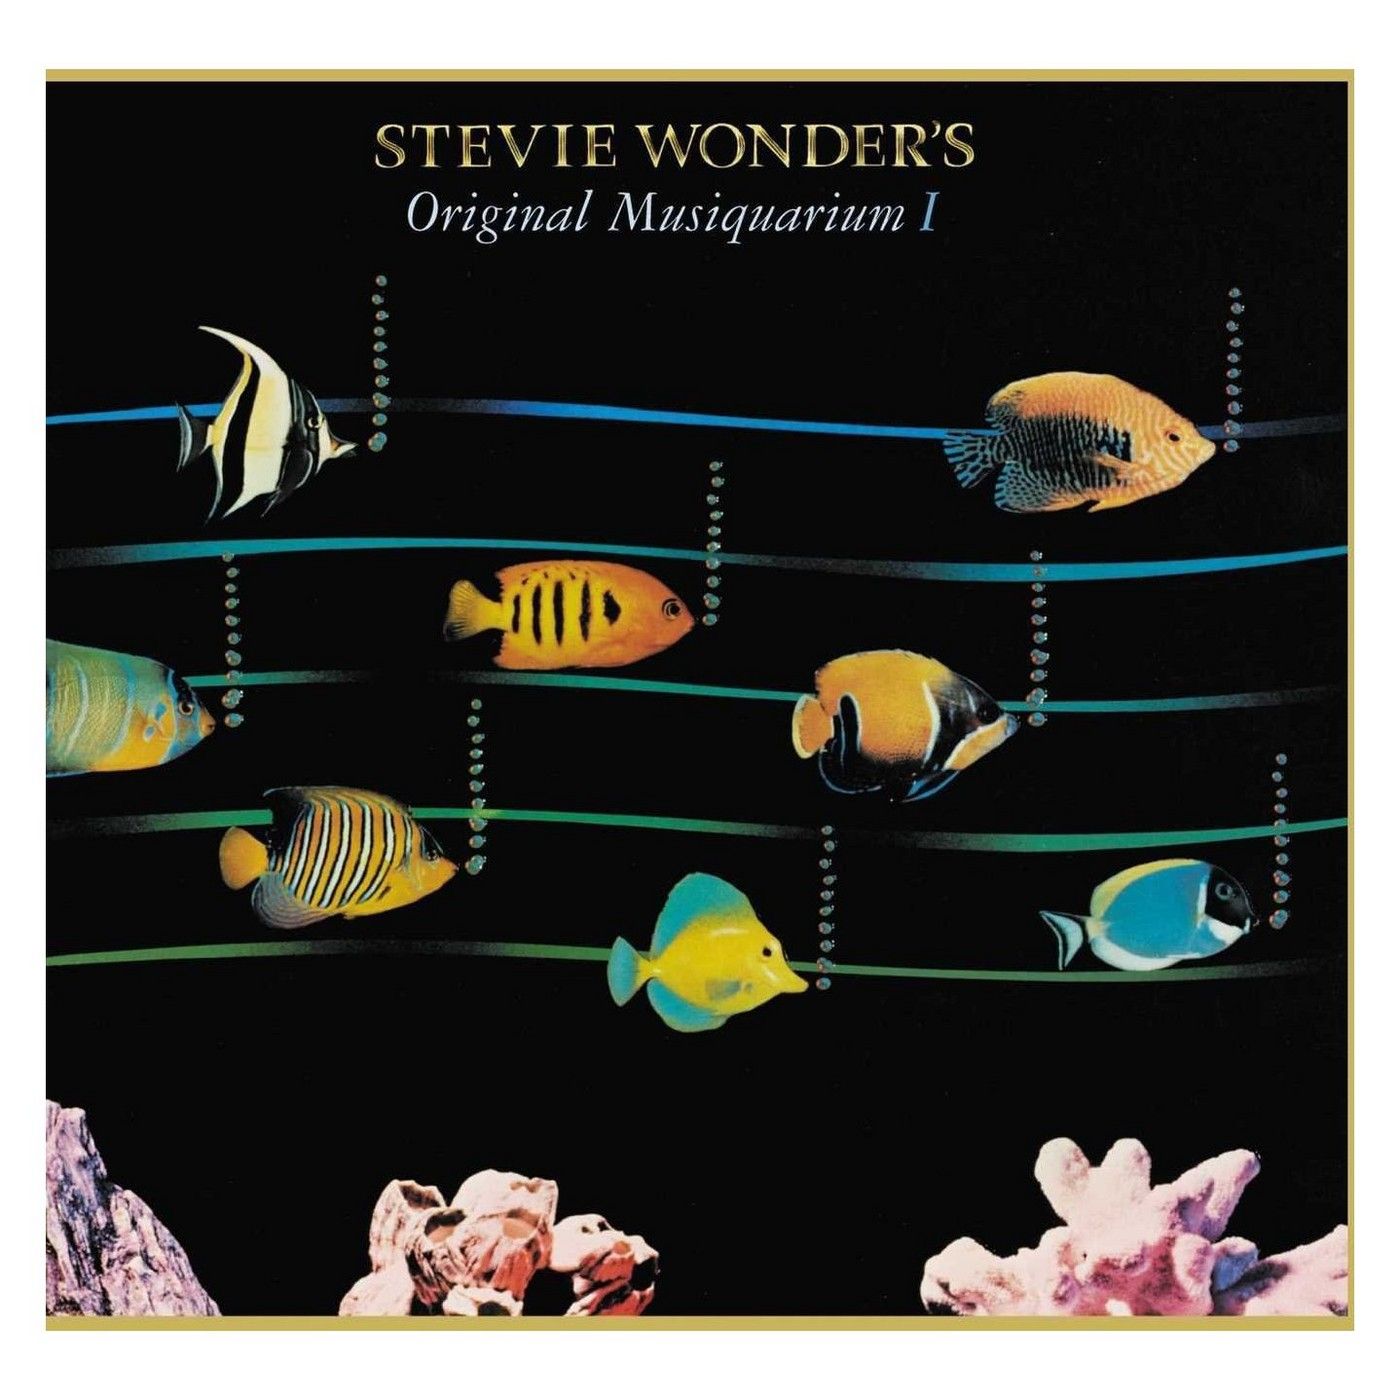 STEVIE WONDER - ORIGINAL MUSIQUARIUM I - EDICIÓN LIMITADA - 2-LP - LP DE VINILO